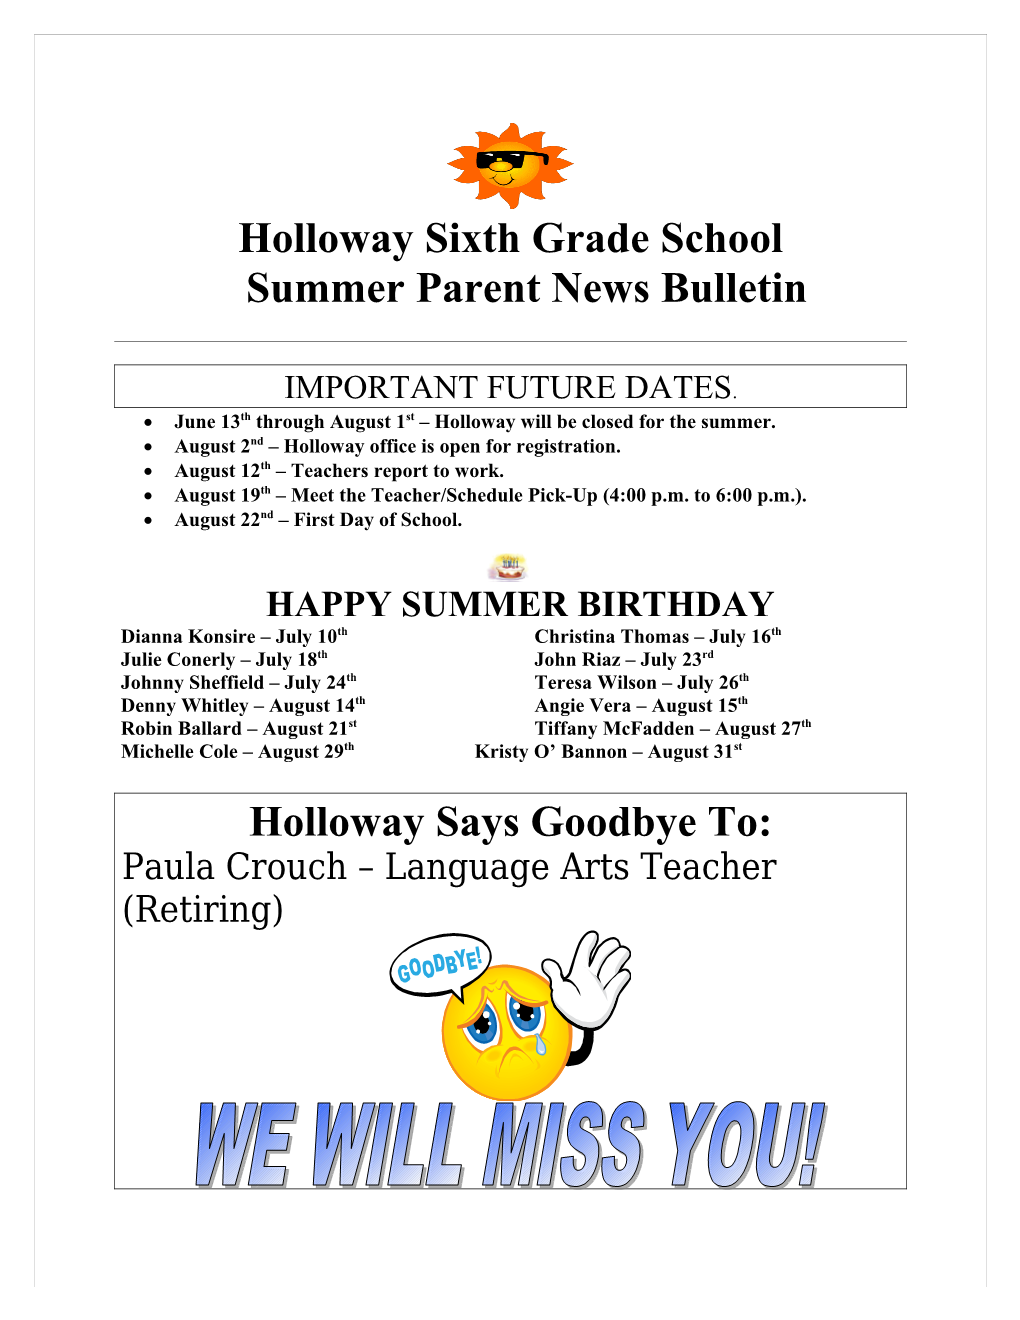 Holloway Sixth Grade School